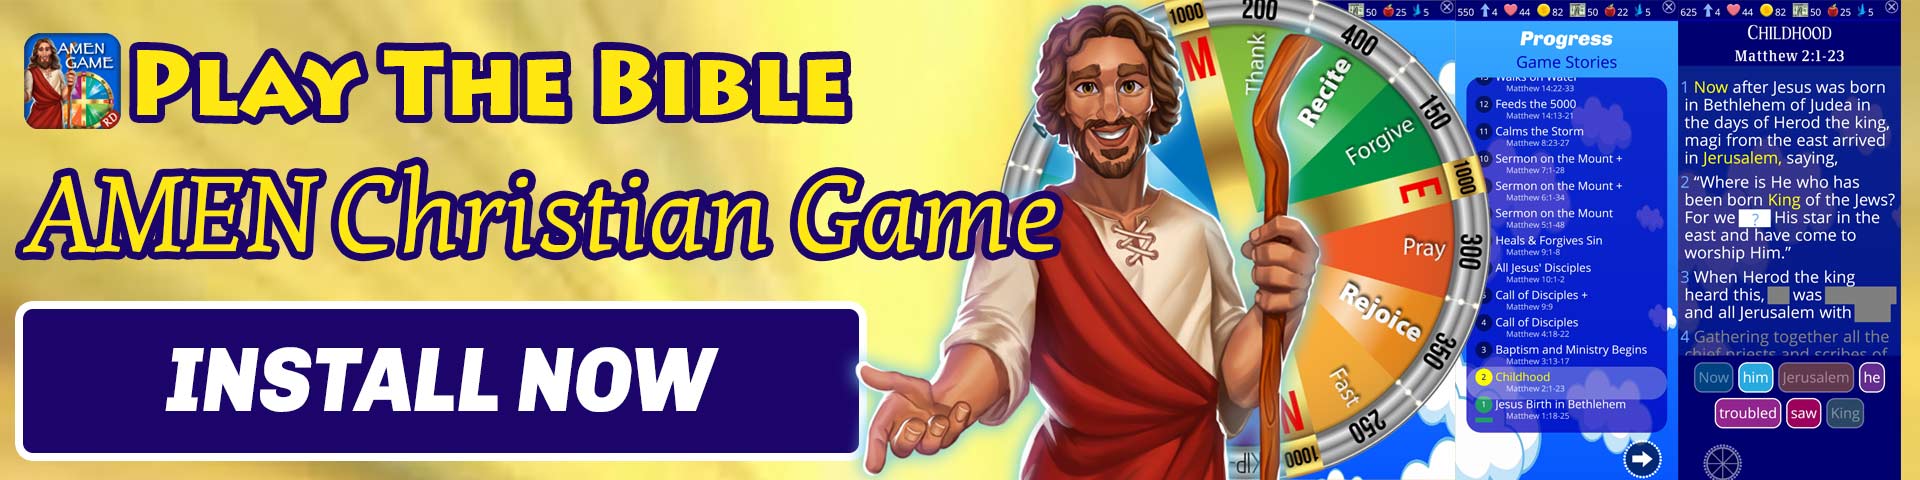 The AMEN Christian Game